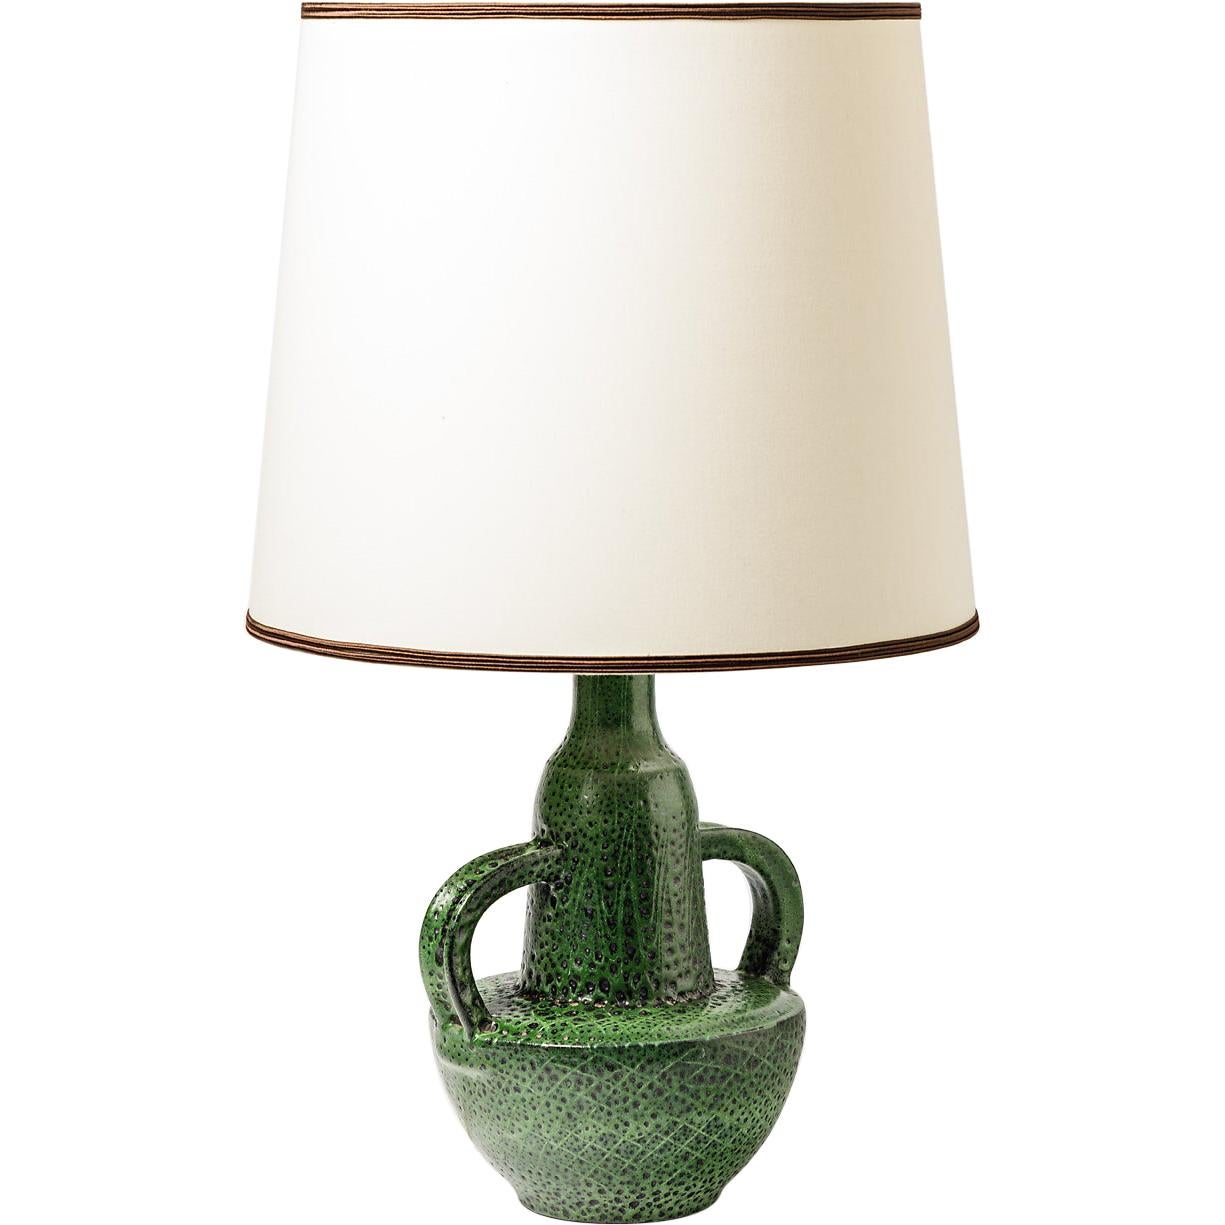 Elegant 20th Midcentury Green Ceramic Table Lamp by Jean Austruy French Art